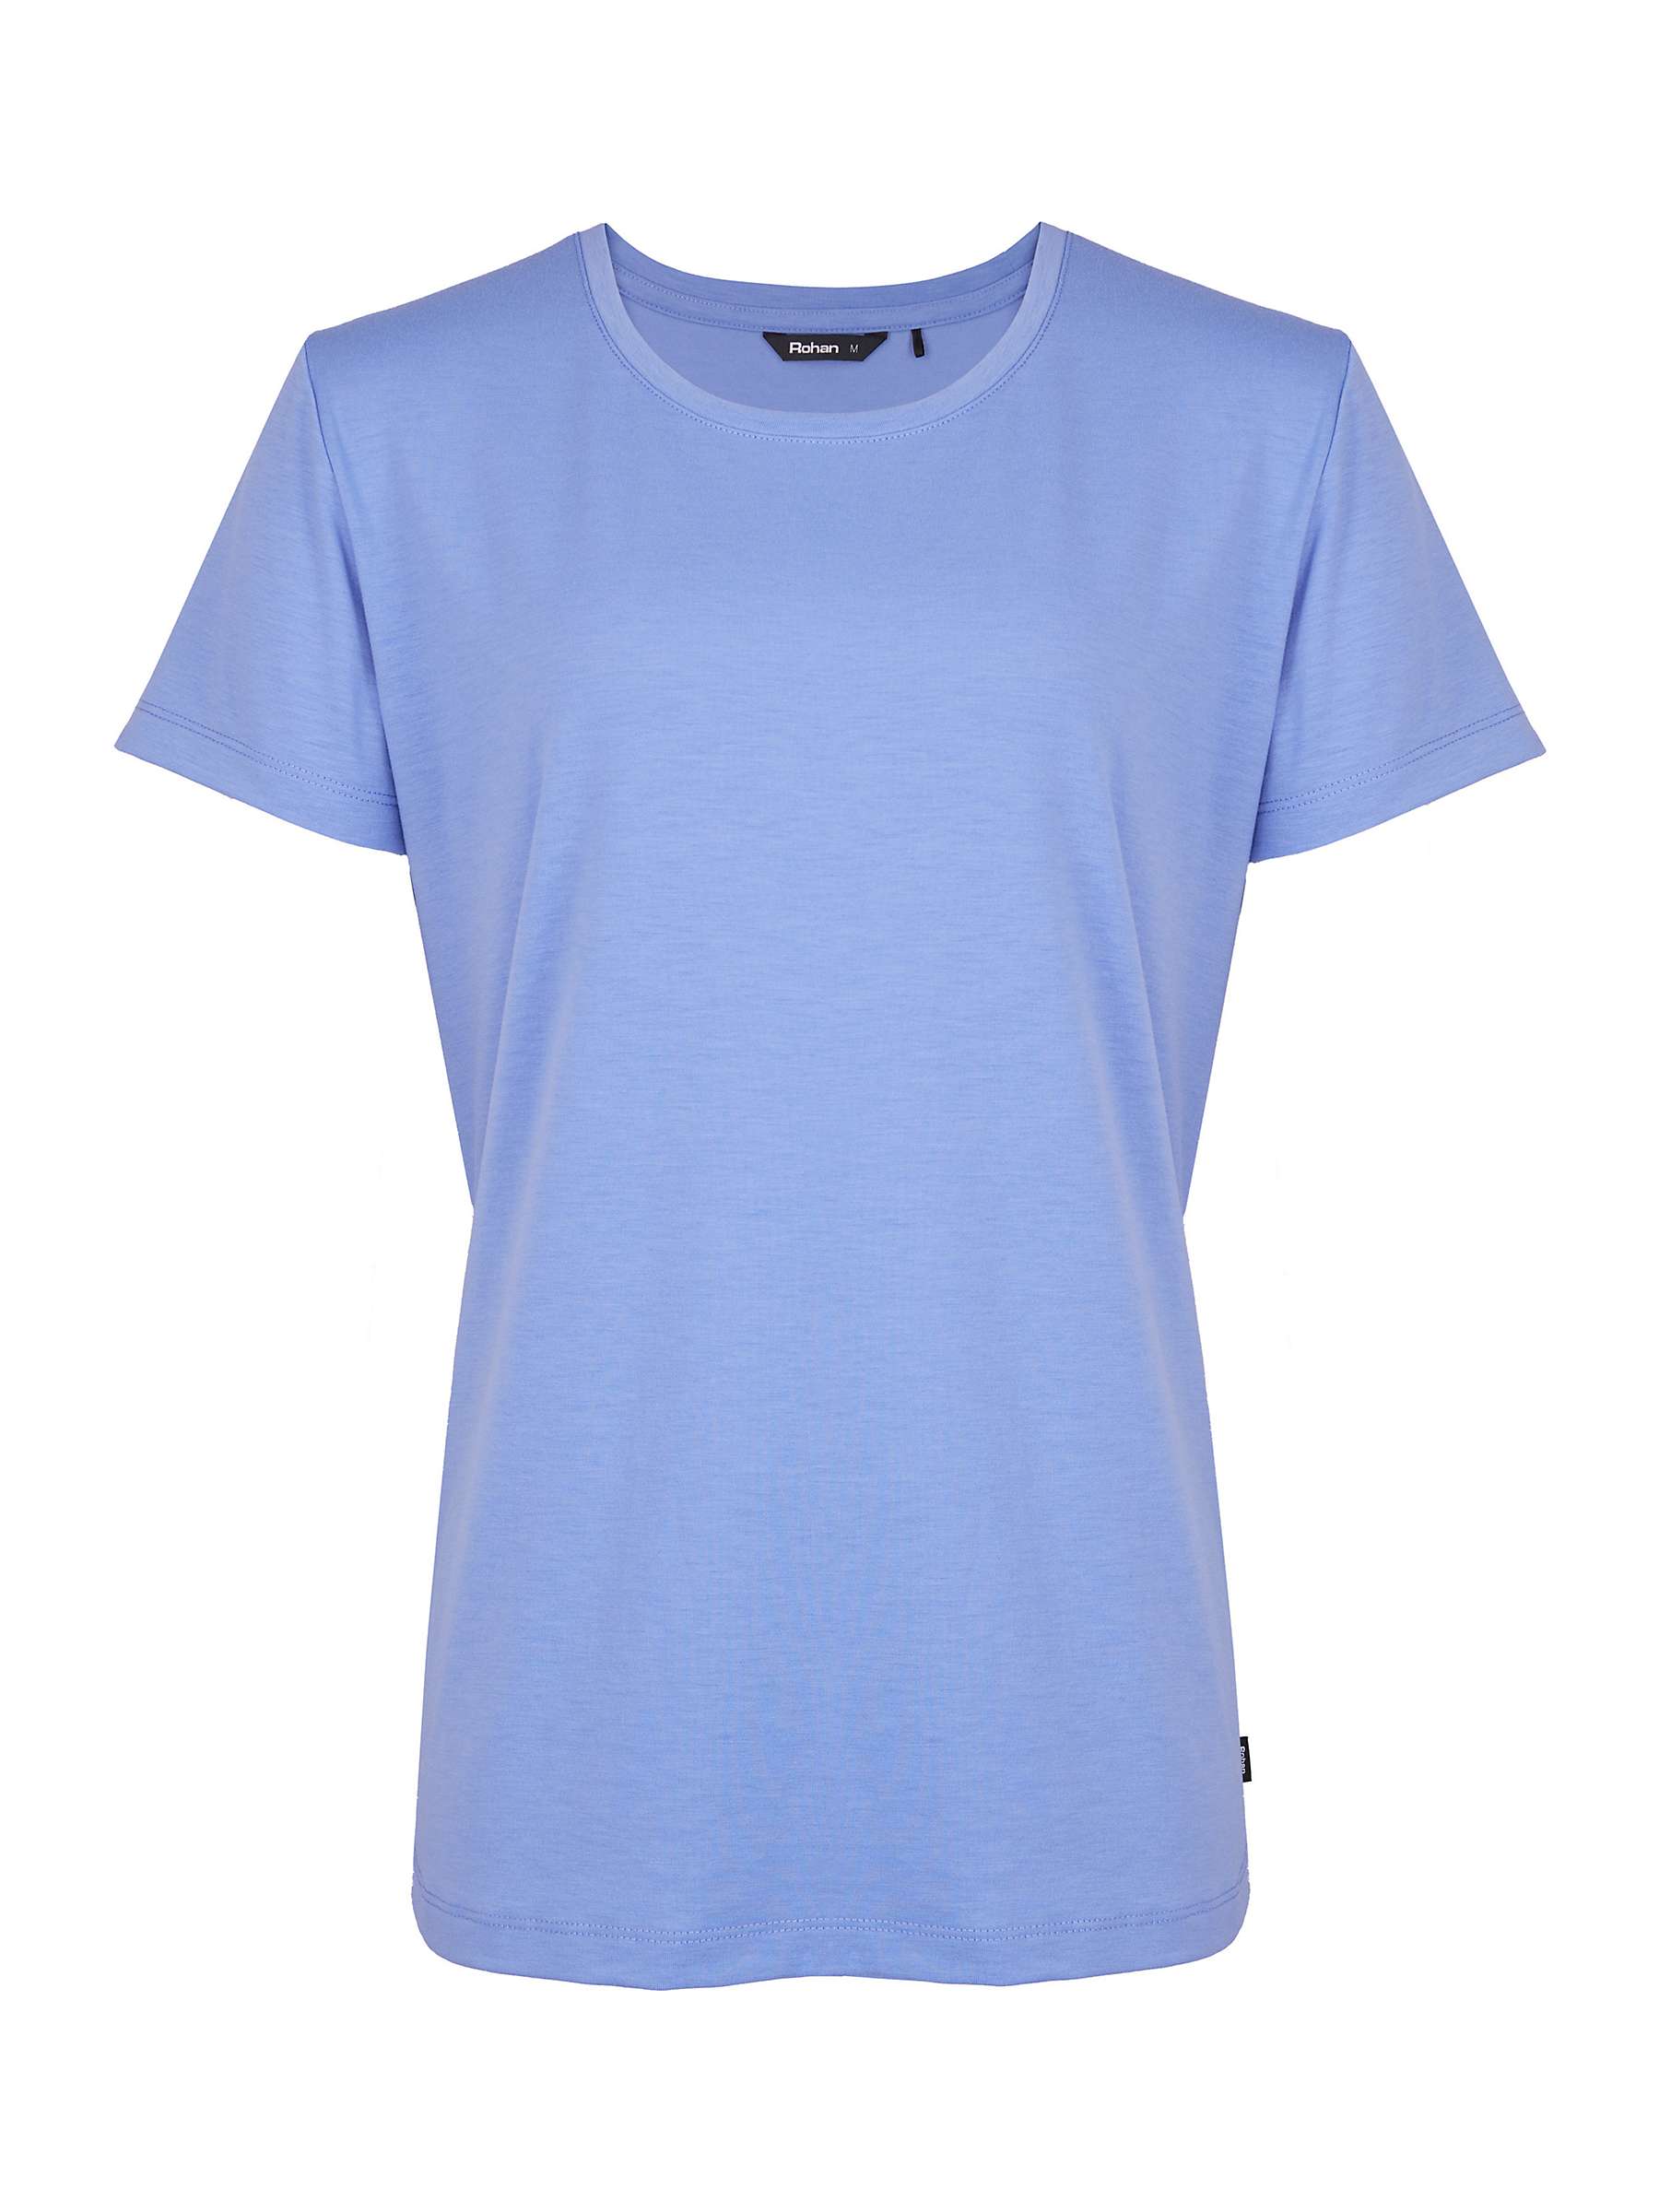 Buy Rohan Global Short Sleeve T-Shirt Online at johnlewis.com